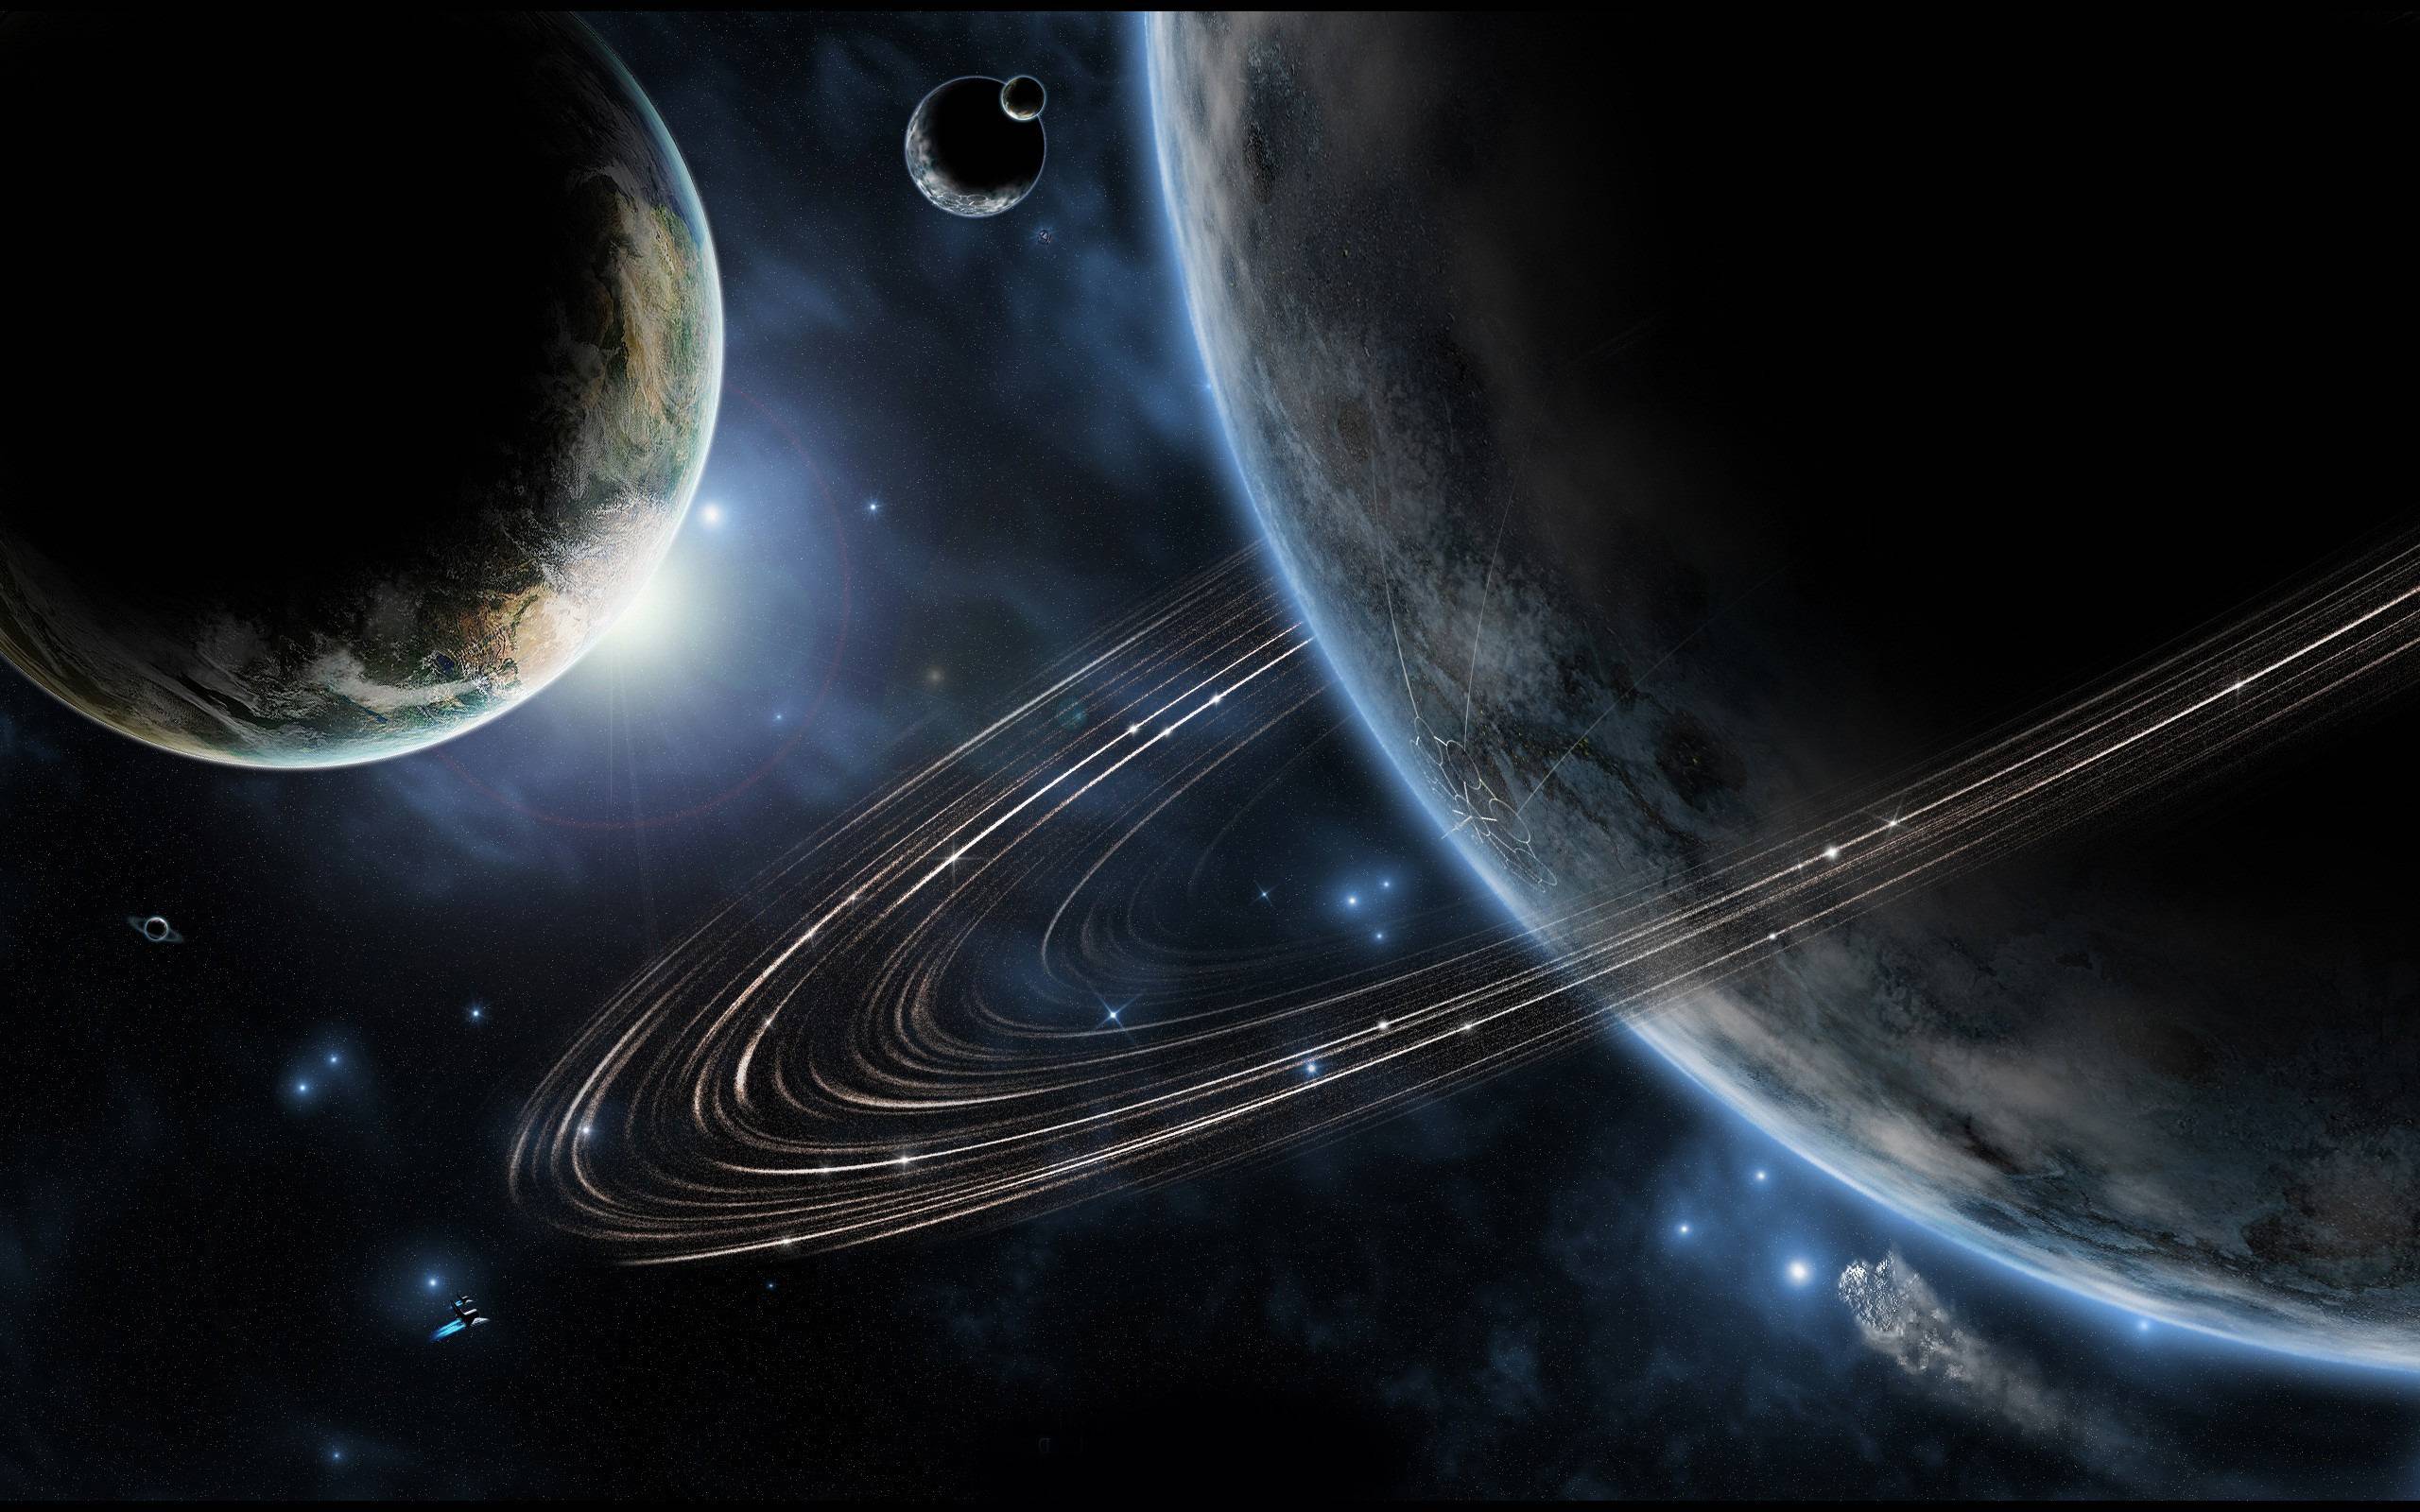 4k Ultra Hd Planets Wallpapers Top Free 4k Ultra Hd Planets Backgrounds Wallpaperaccess 0754